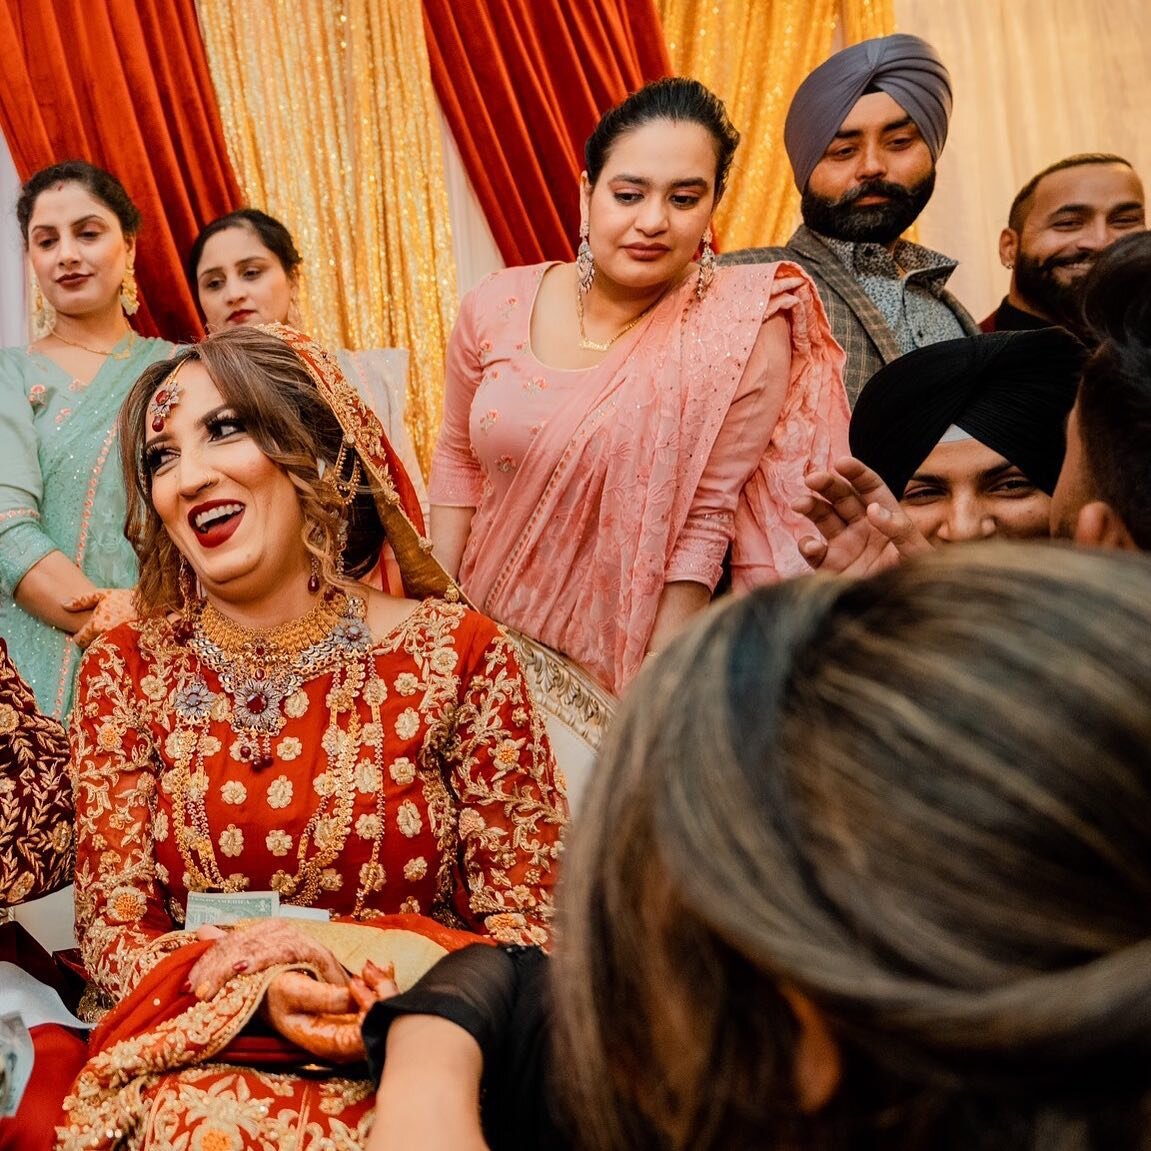 T&amp;Y 💗- January 29, 2021 - Long Island, New York
&bull;
&bull;
&bull;
&bull;
#nikkah #muslimcouple #muslimphotographer #beautifulwedding #love #nikkahday #weddingday #reception #bengaliwedding #bengalinikkah #pakistaniweddings #weddingseason #wed